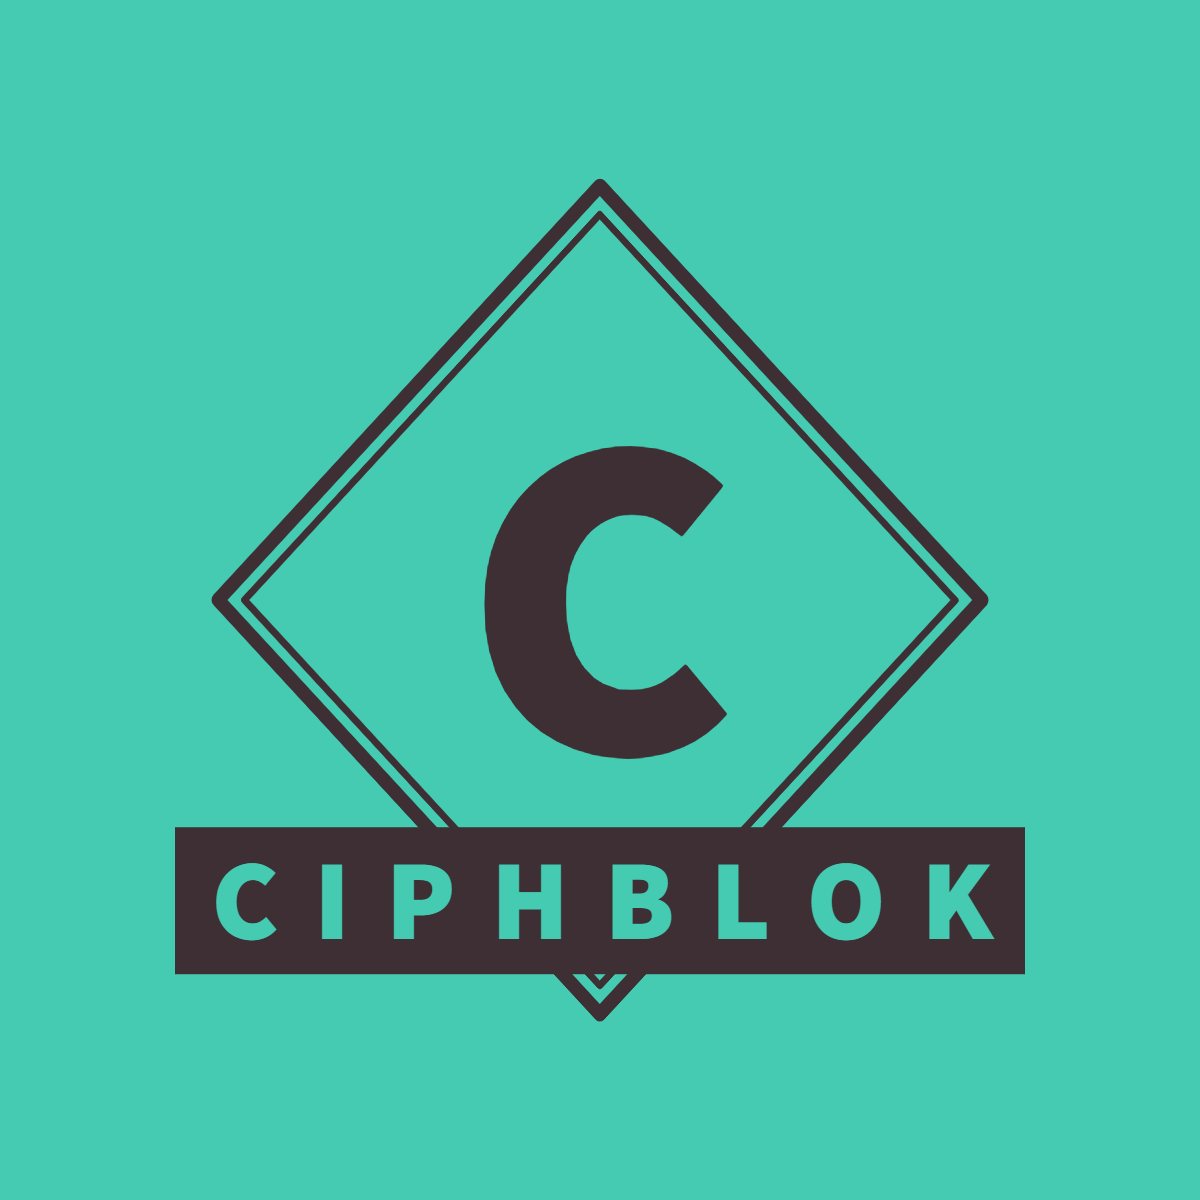 Ciphblok